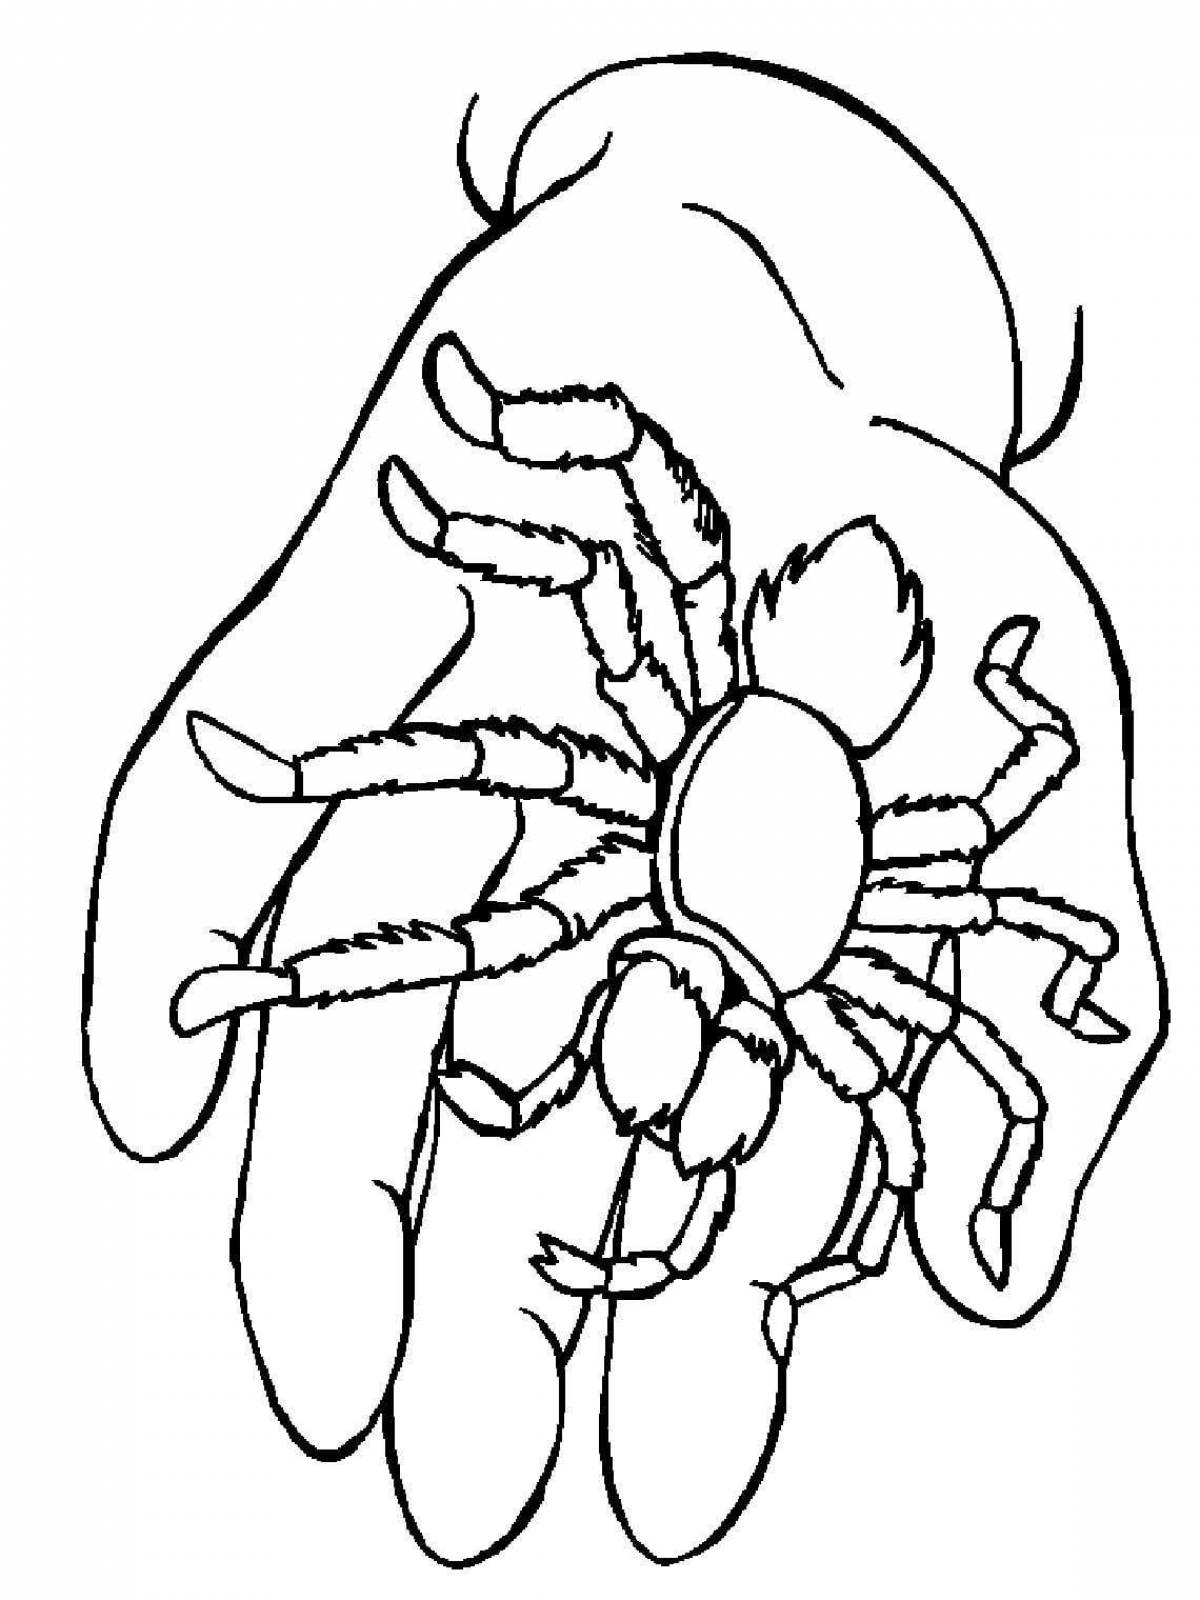 Charming spider tarantula coloring book